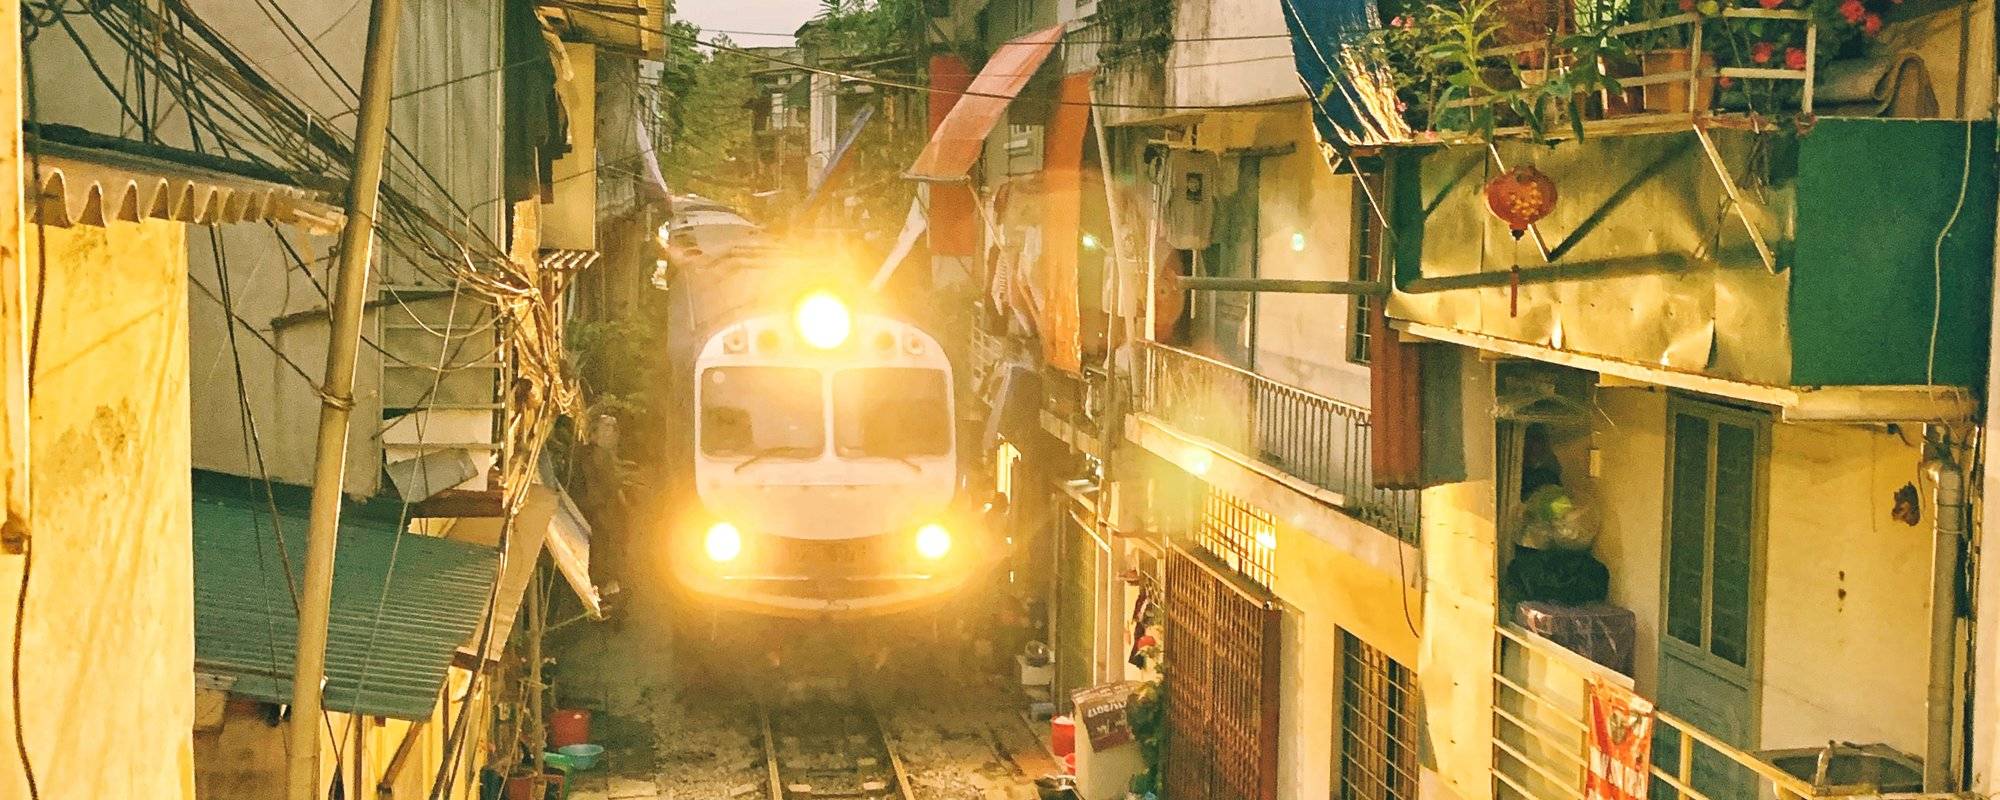 The Railway Hanoi - Vietnam